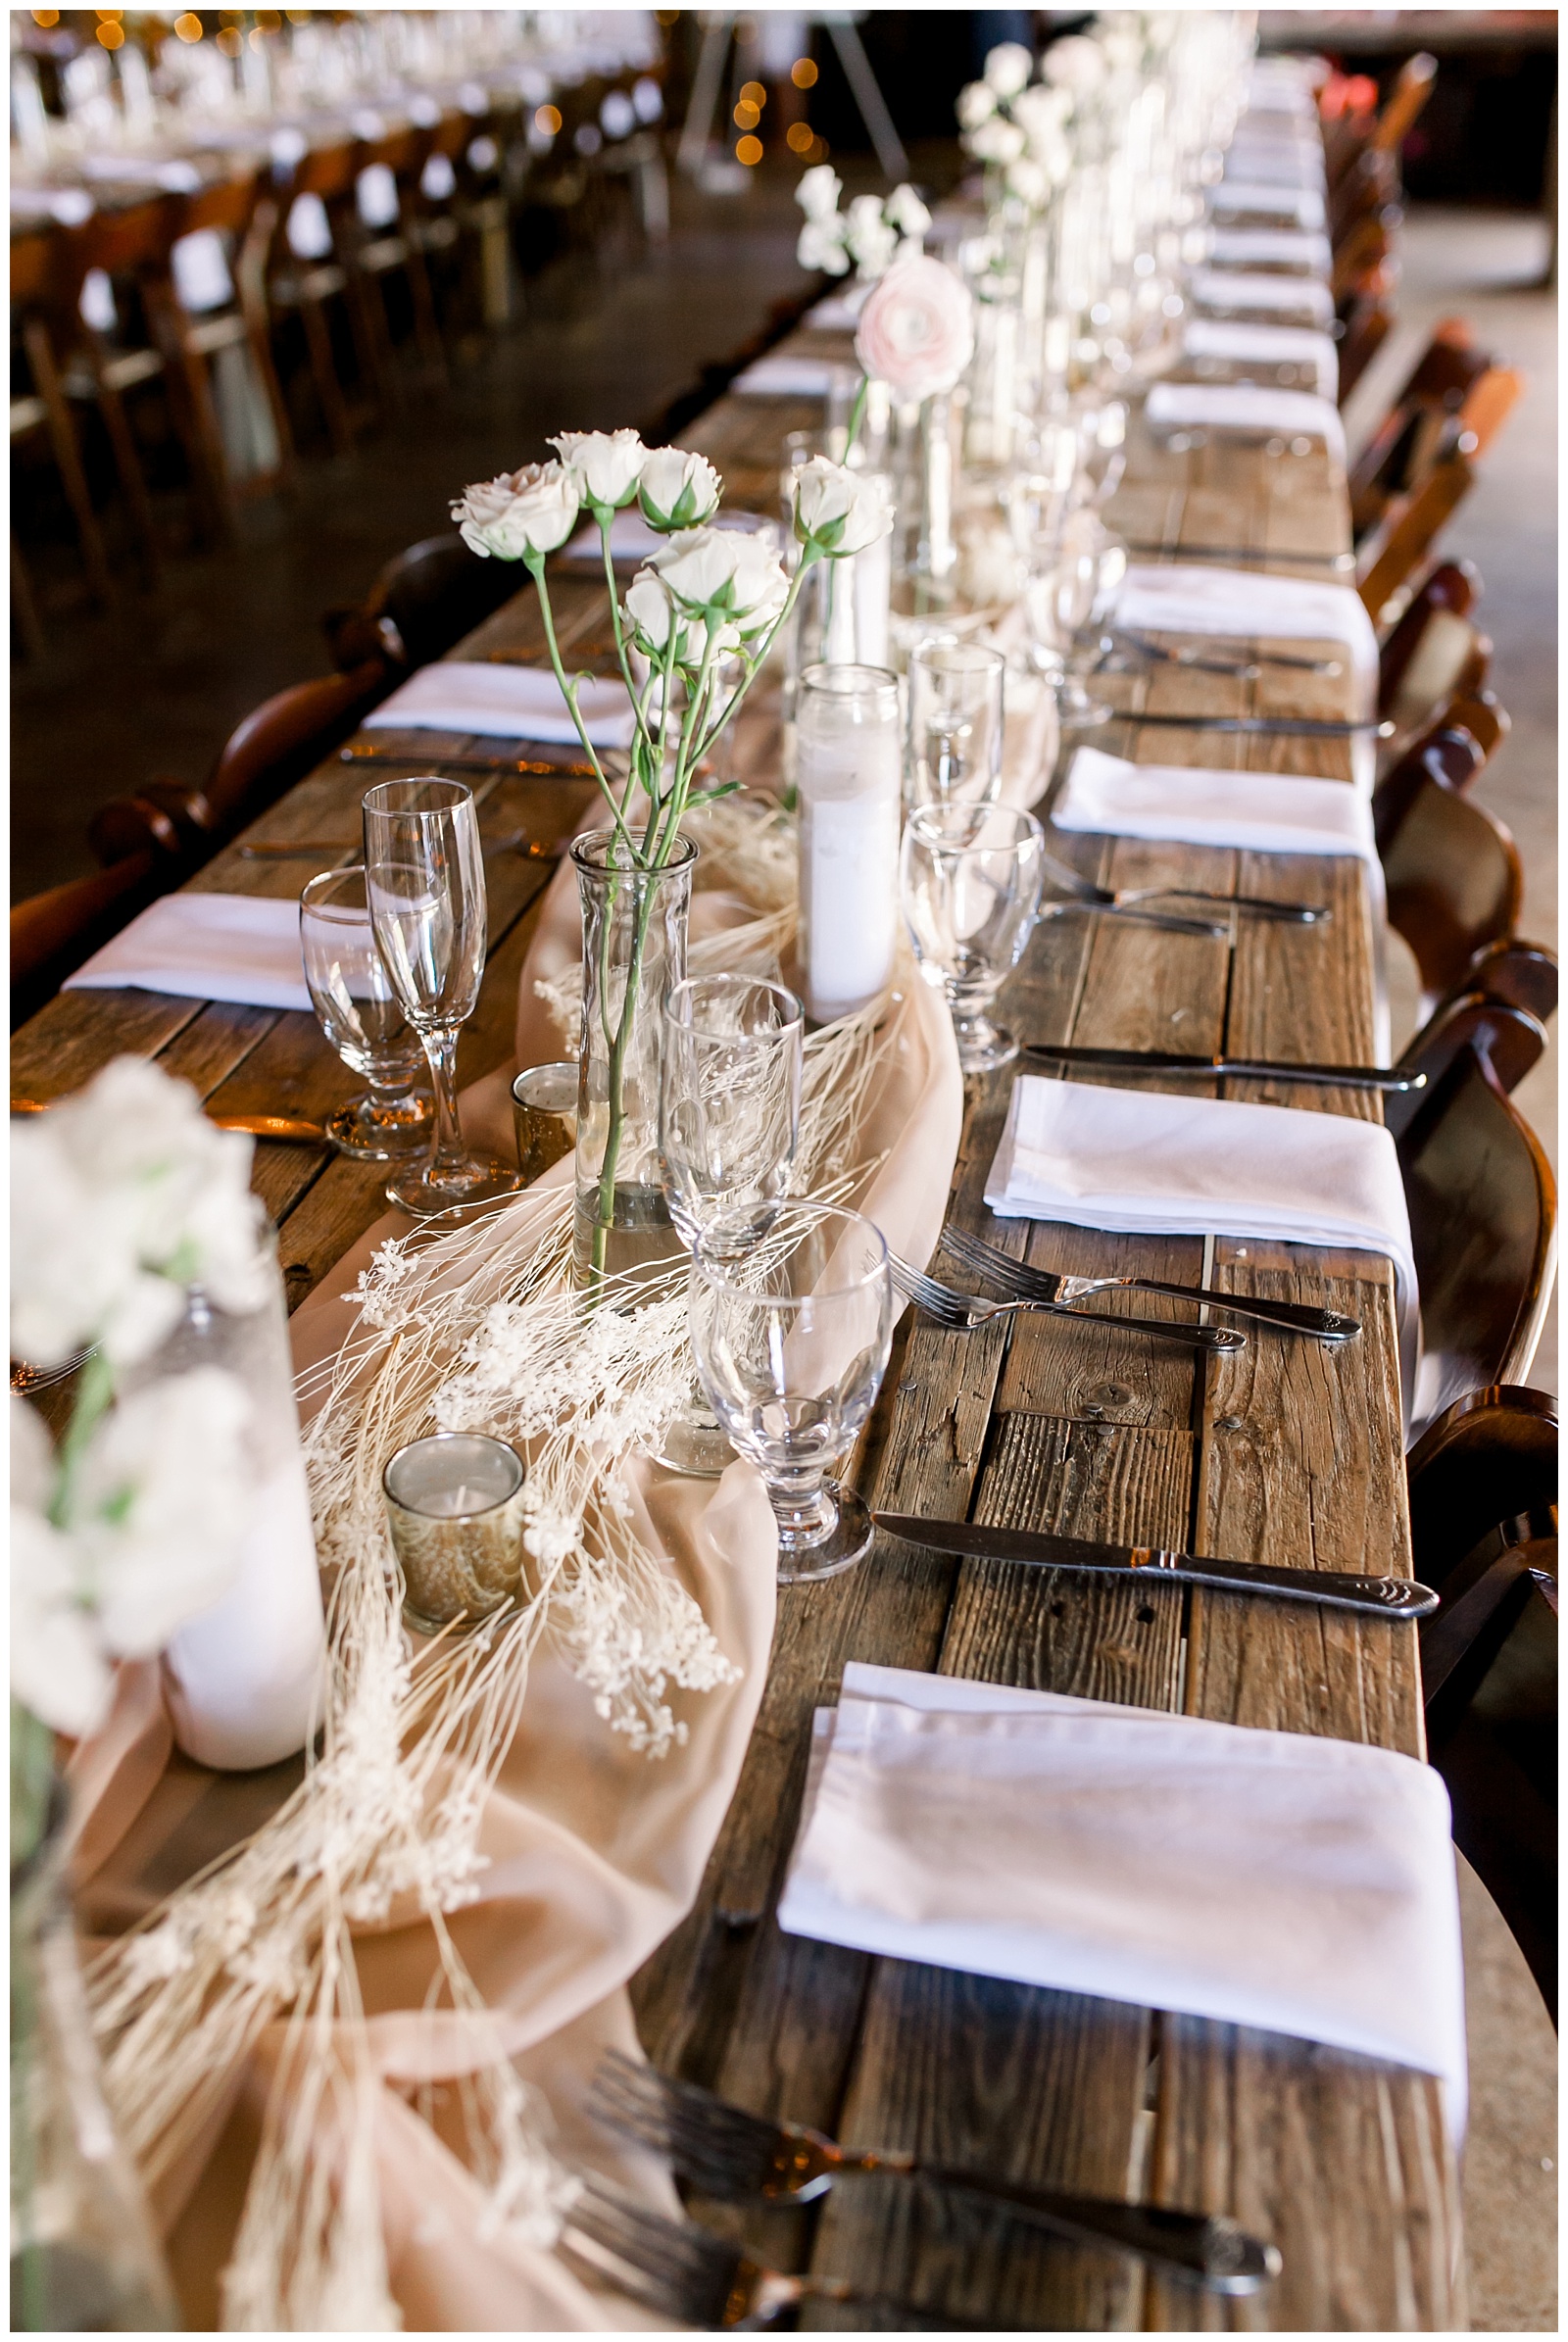 Rustic & romantic table setting at The Allen Farmhaus Wedding, TX by San Antonio-Maui-Destination Wedding Photographer | Monica Roberts Photography | www.monicaroberts.com